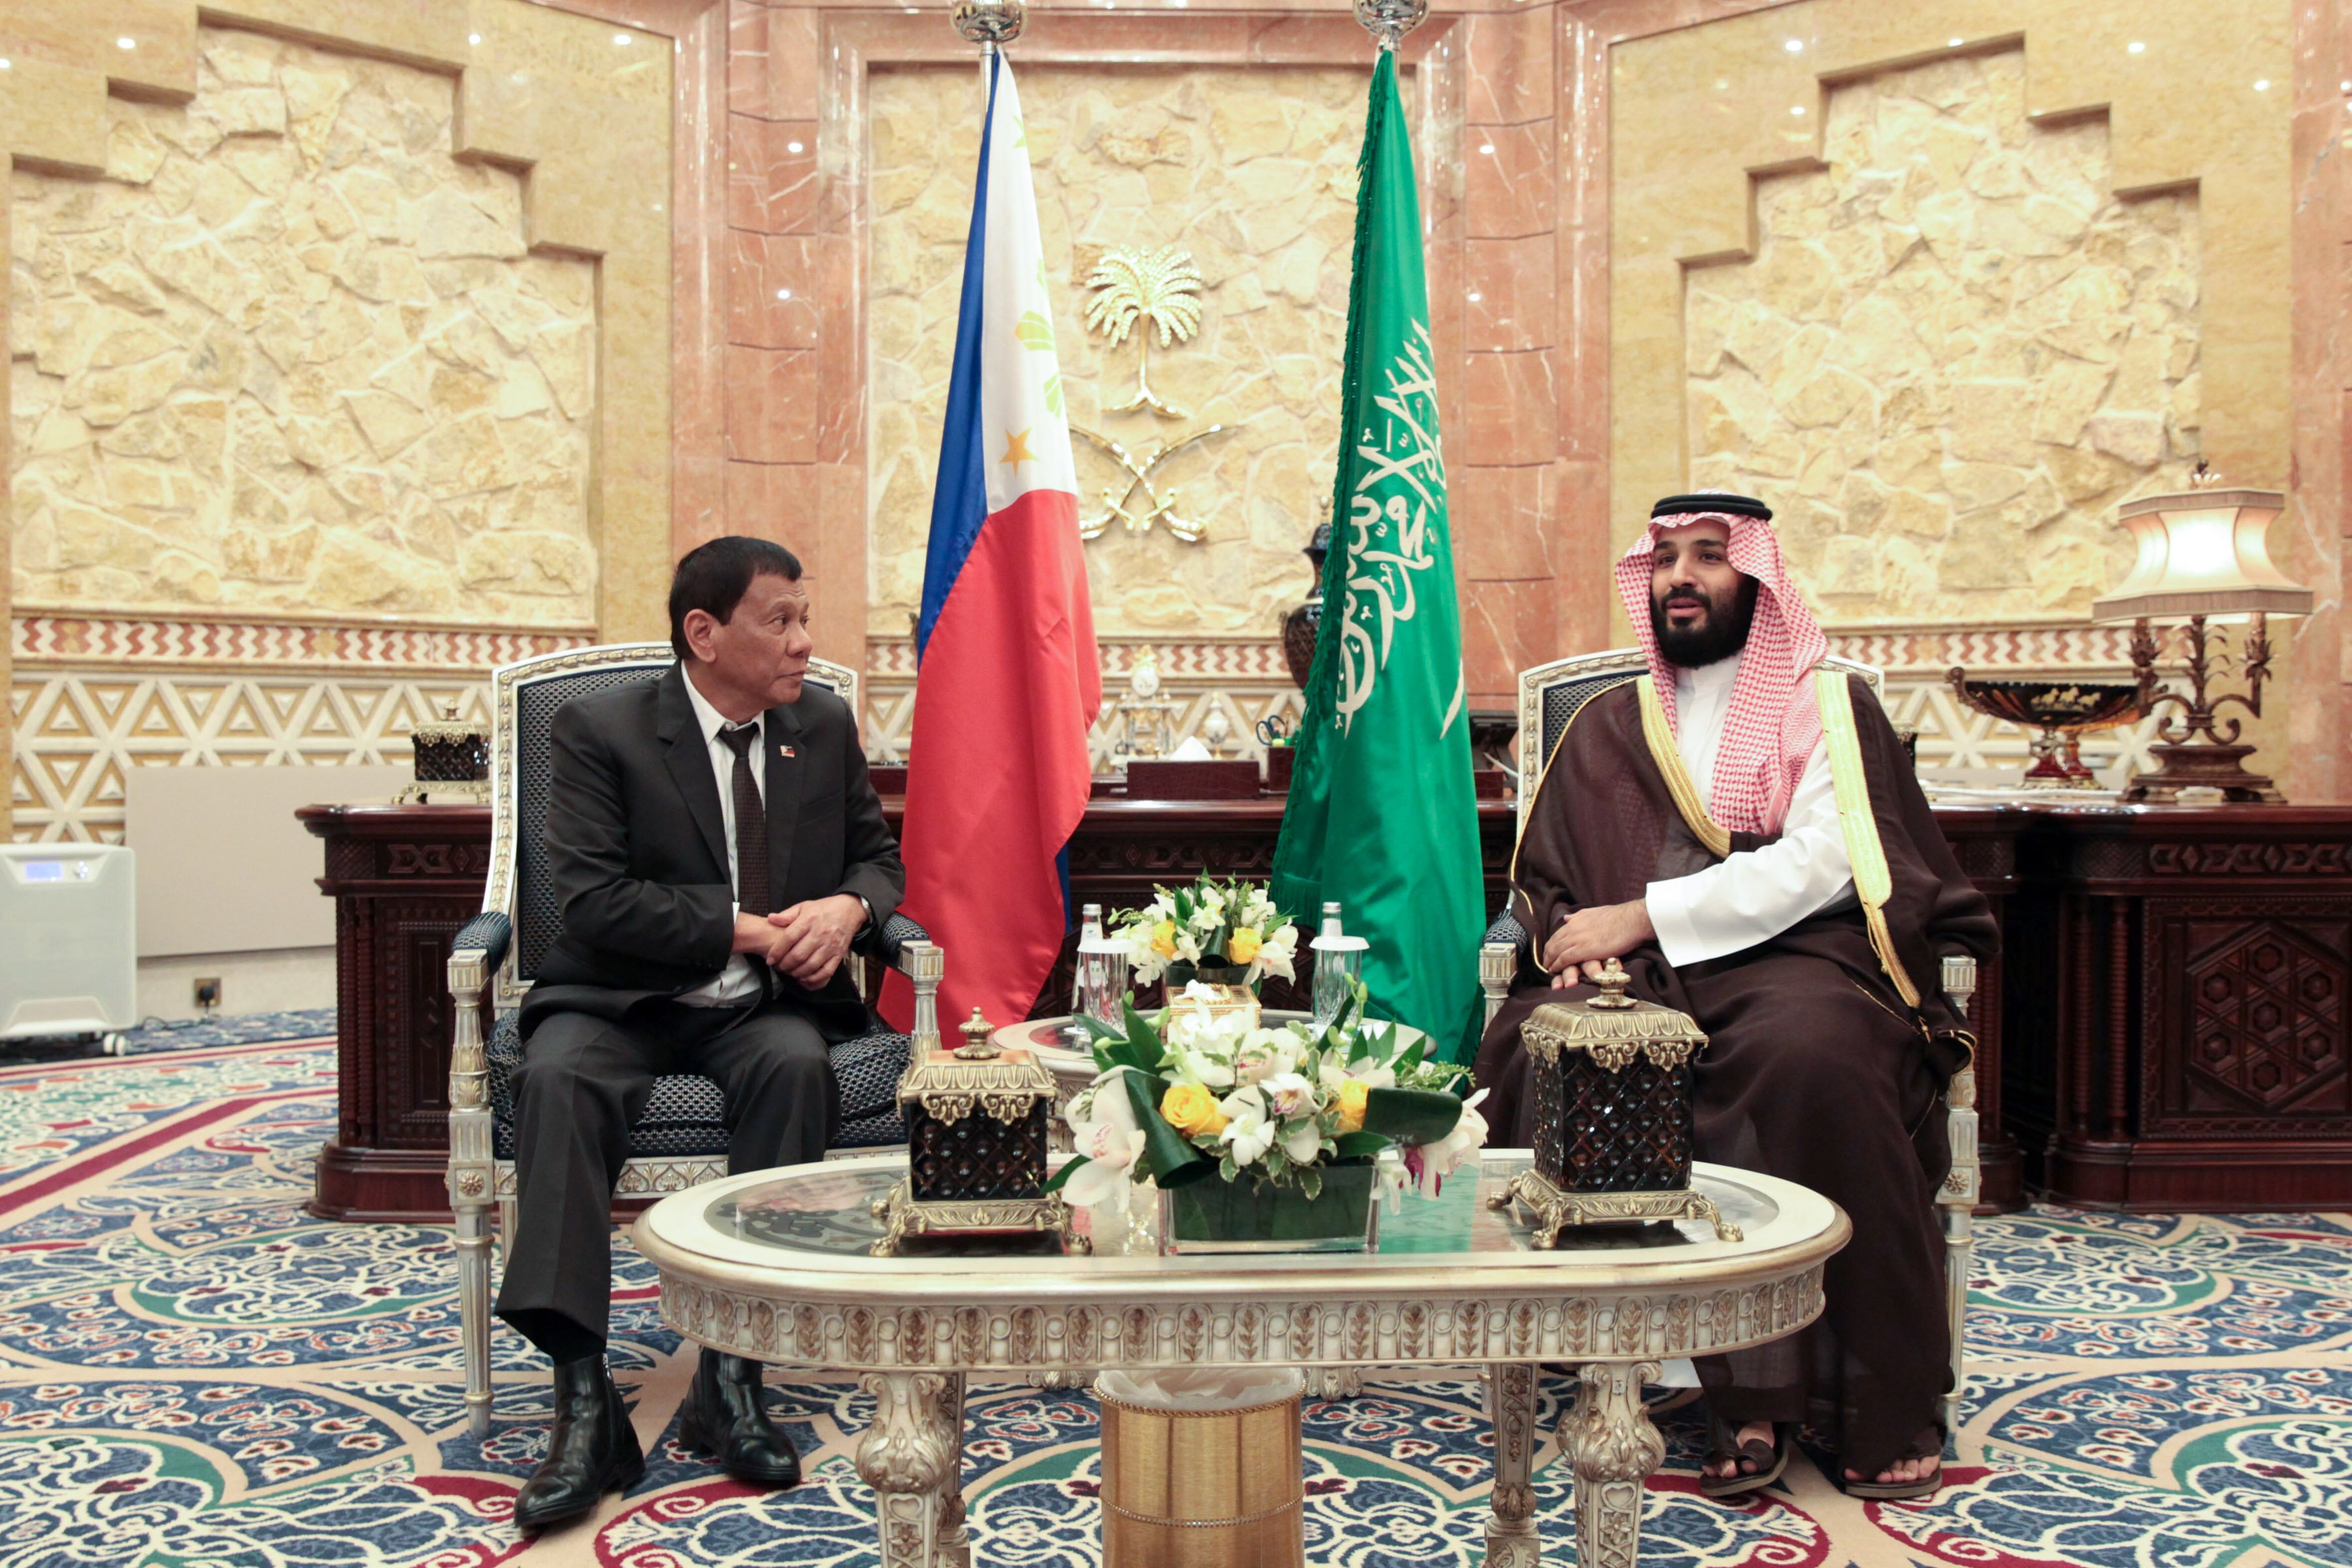 President Duterte meets with Kingdom of Saudi Arabia Deputy Crown Prince Mohammed bin Salman bin Abdulaziz Al Saud